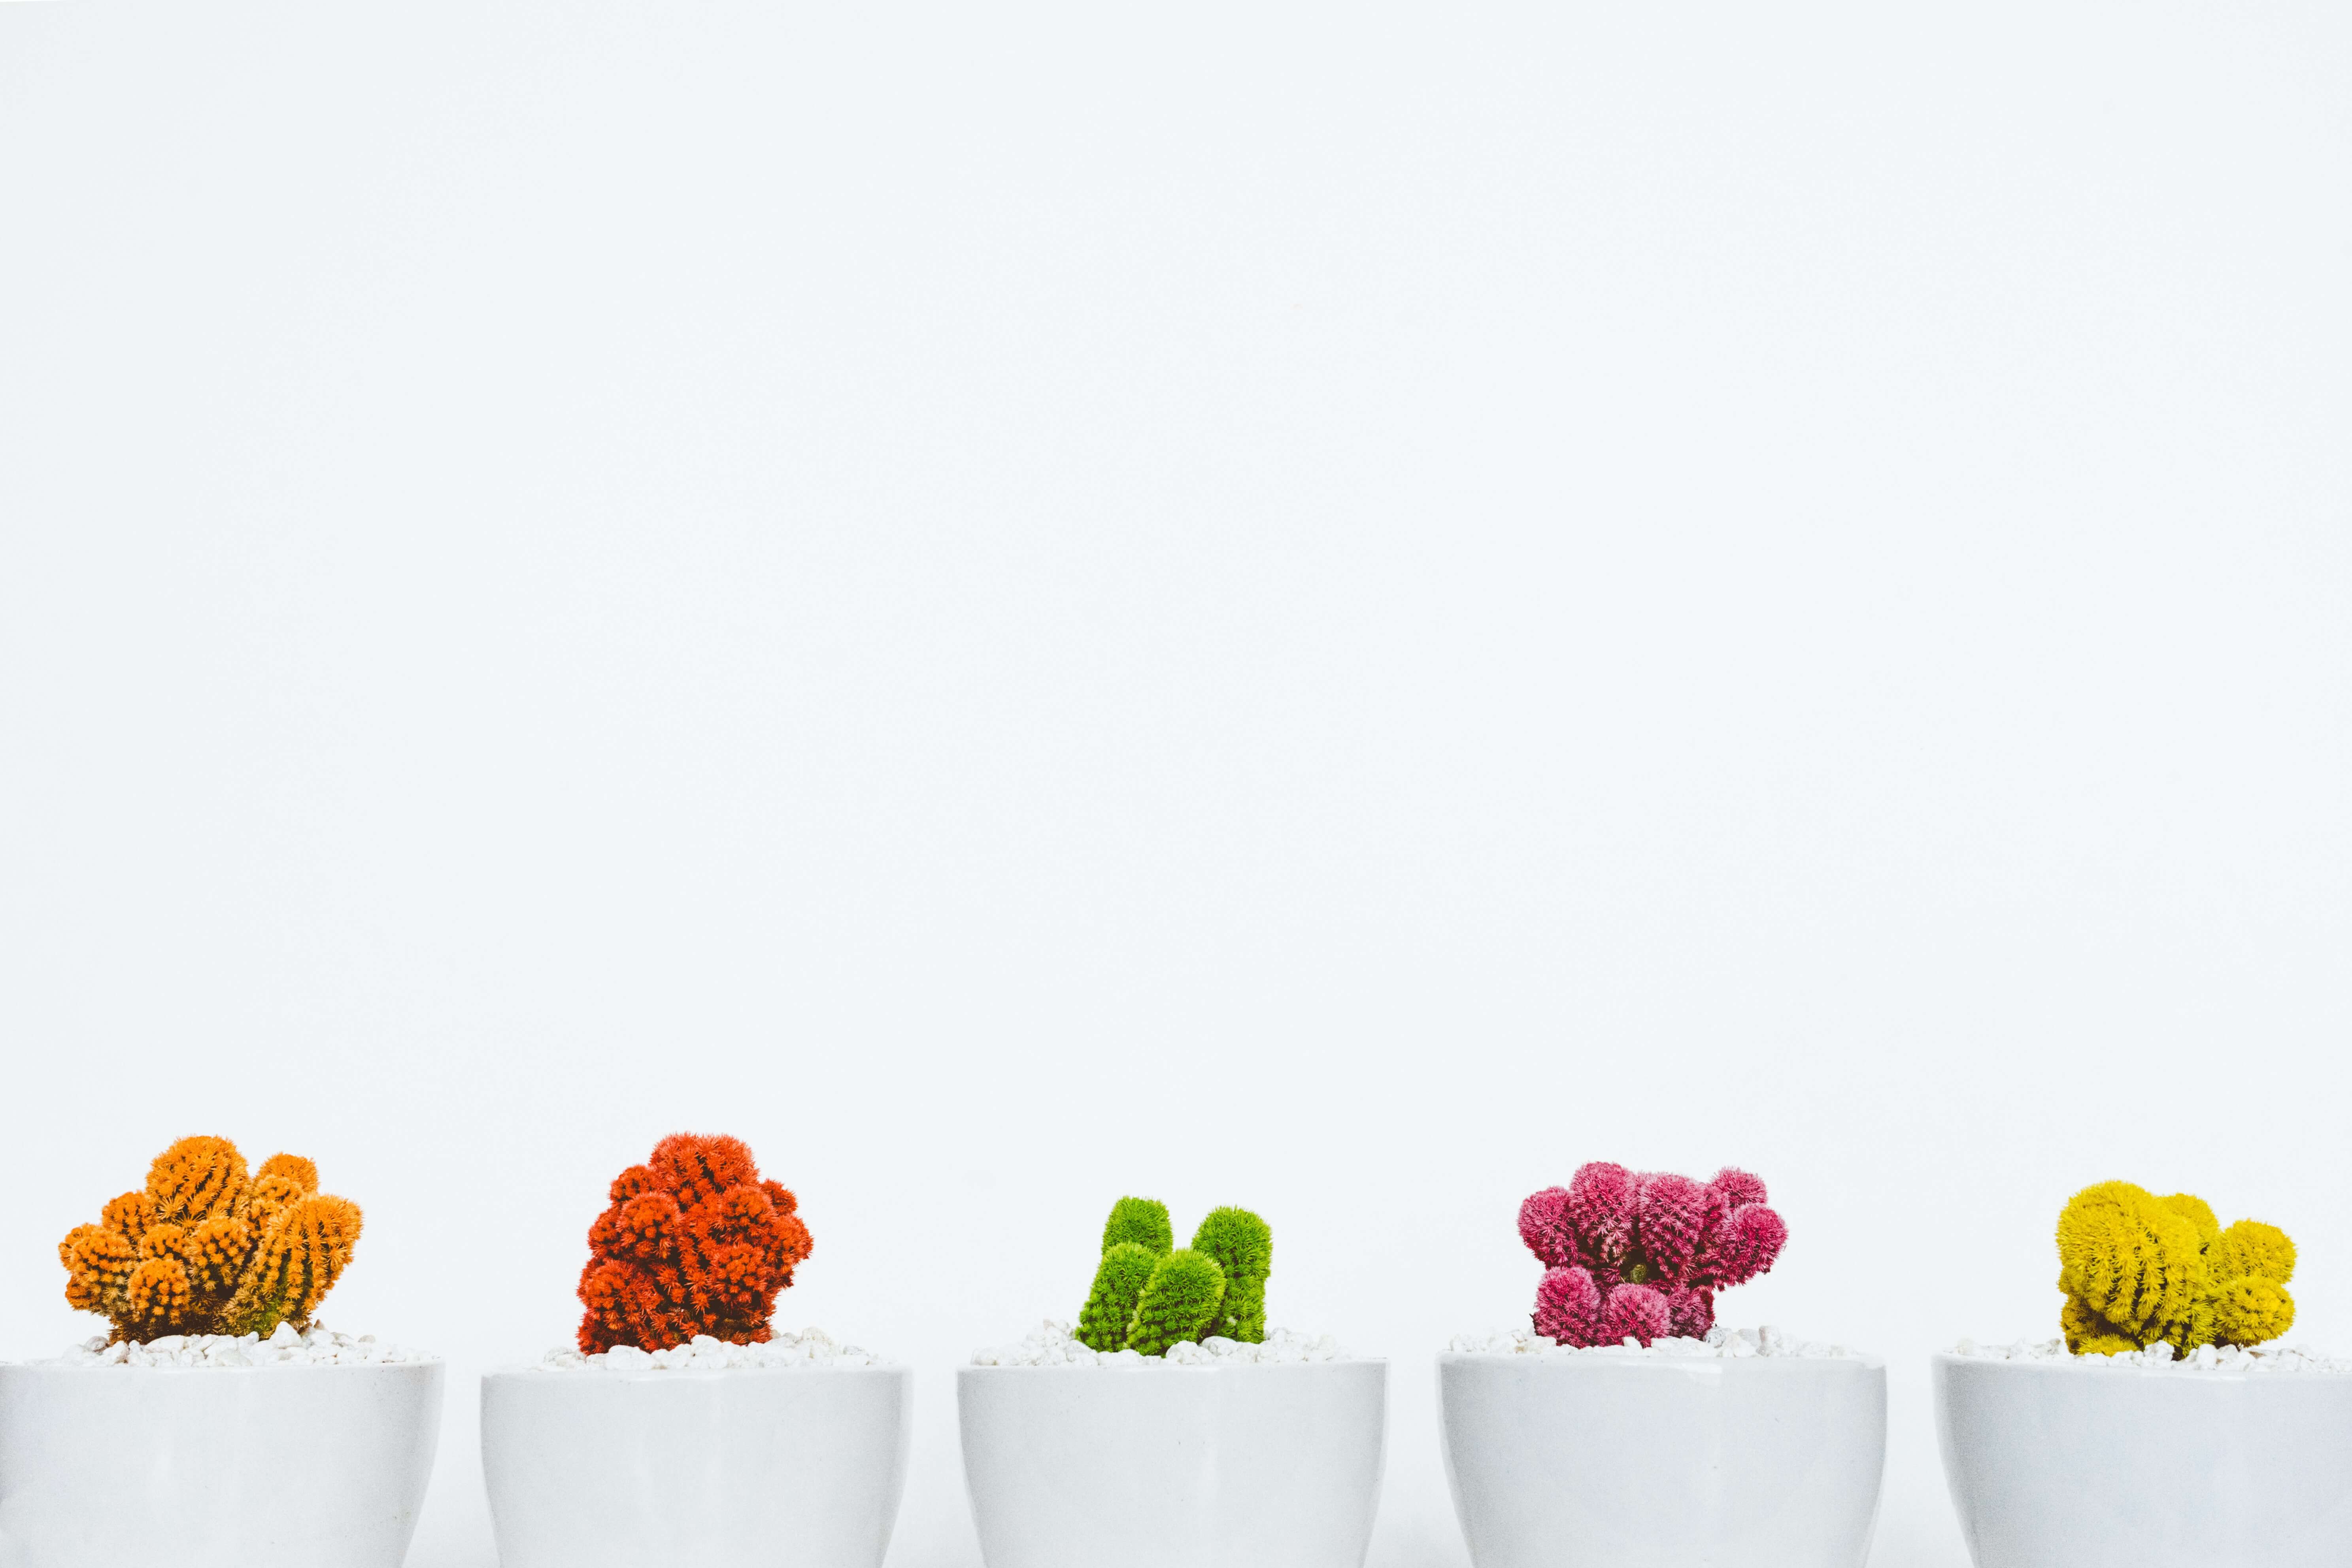 Short succulents against a white background